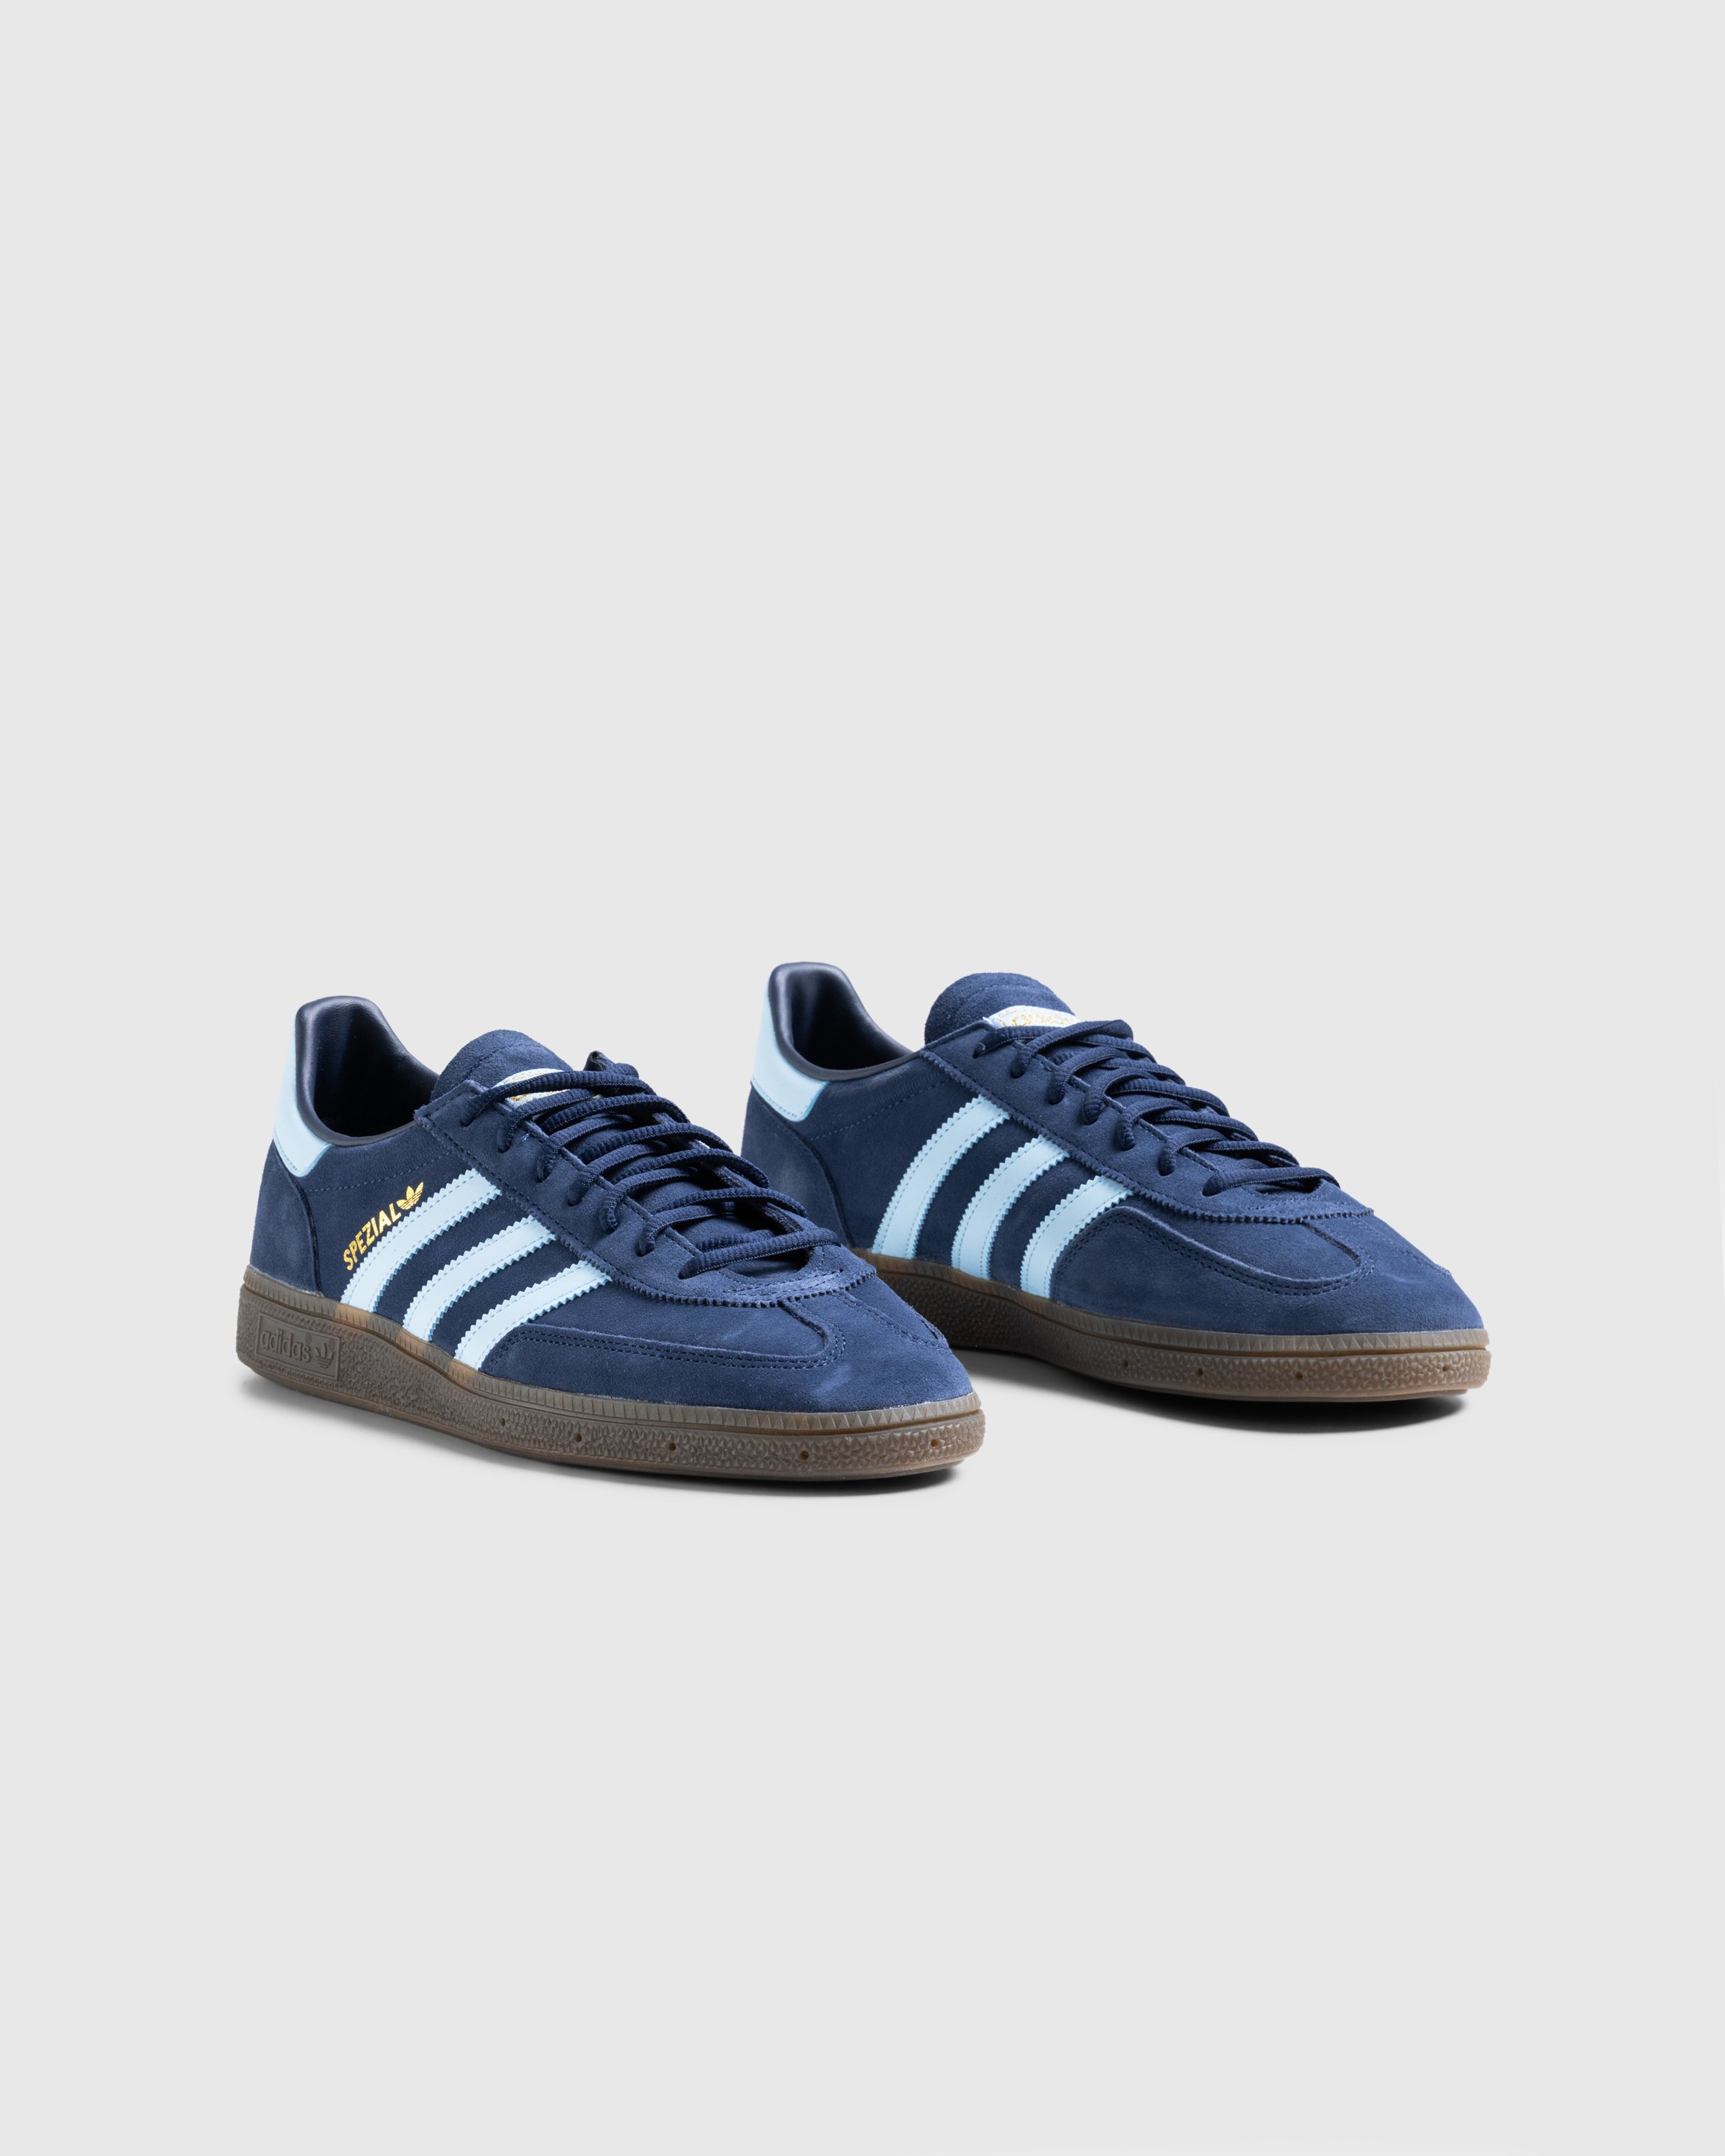 Adidas - Handball Spezial    Conavy/Clesky/Gum5 - Footwear - Blue - Image 3